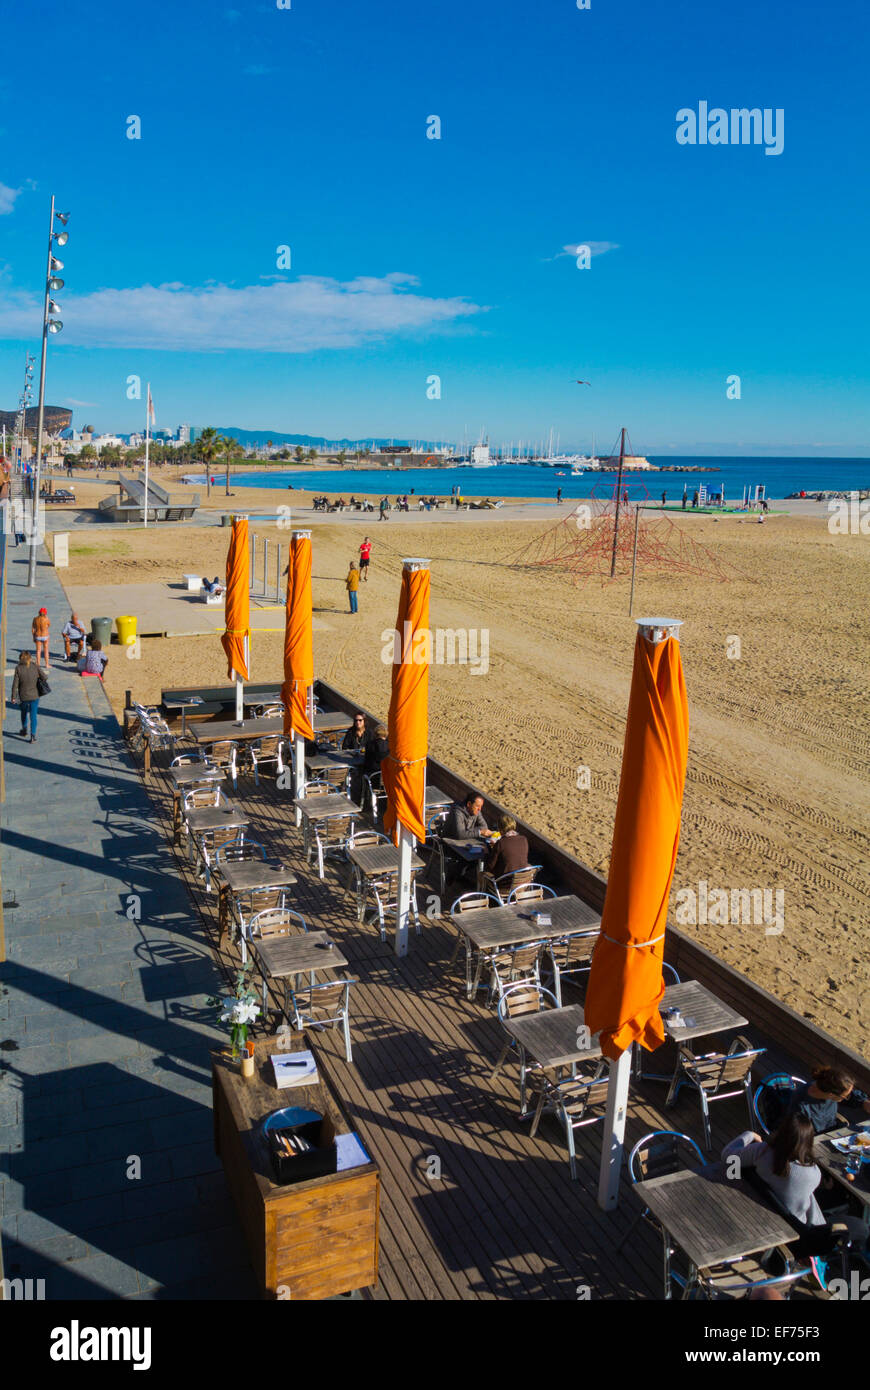 Restaurant terrace on the beach at La Barceloneta, Barcelona, Spain Stock Photo